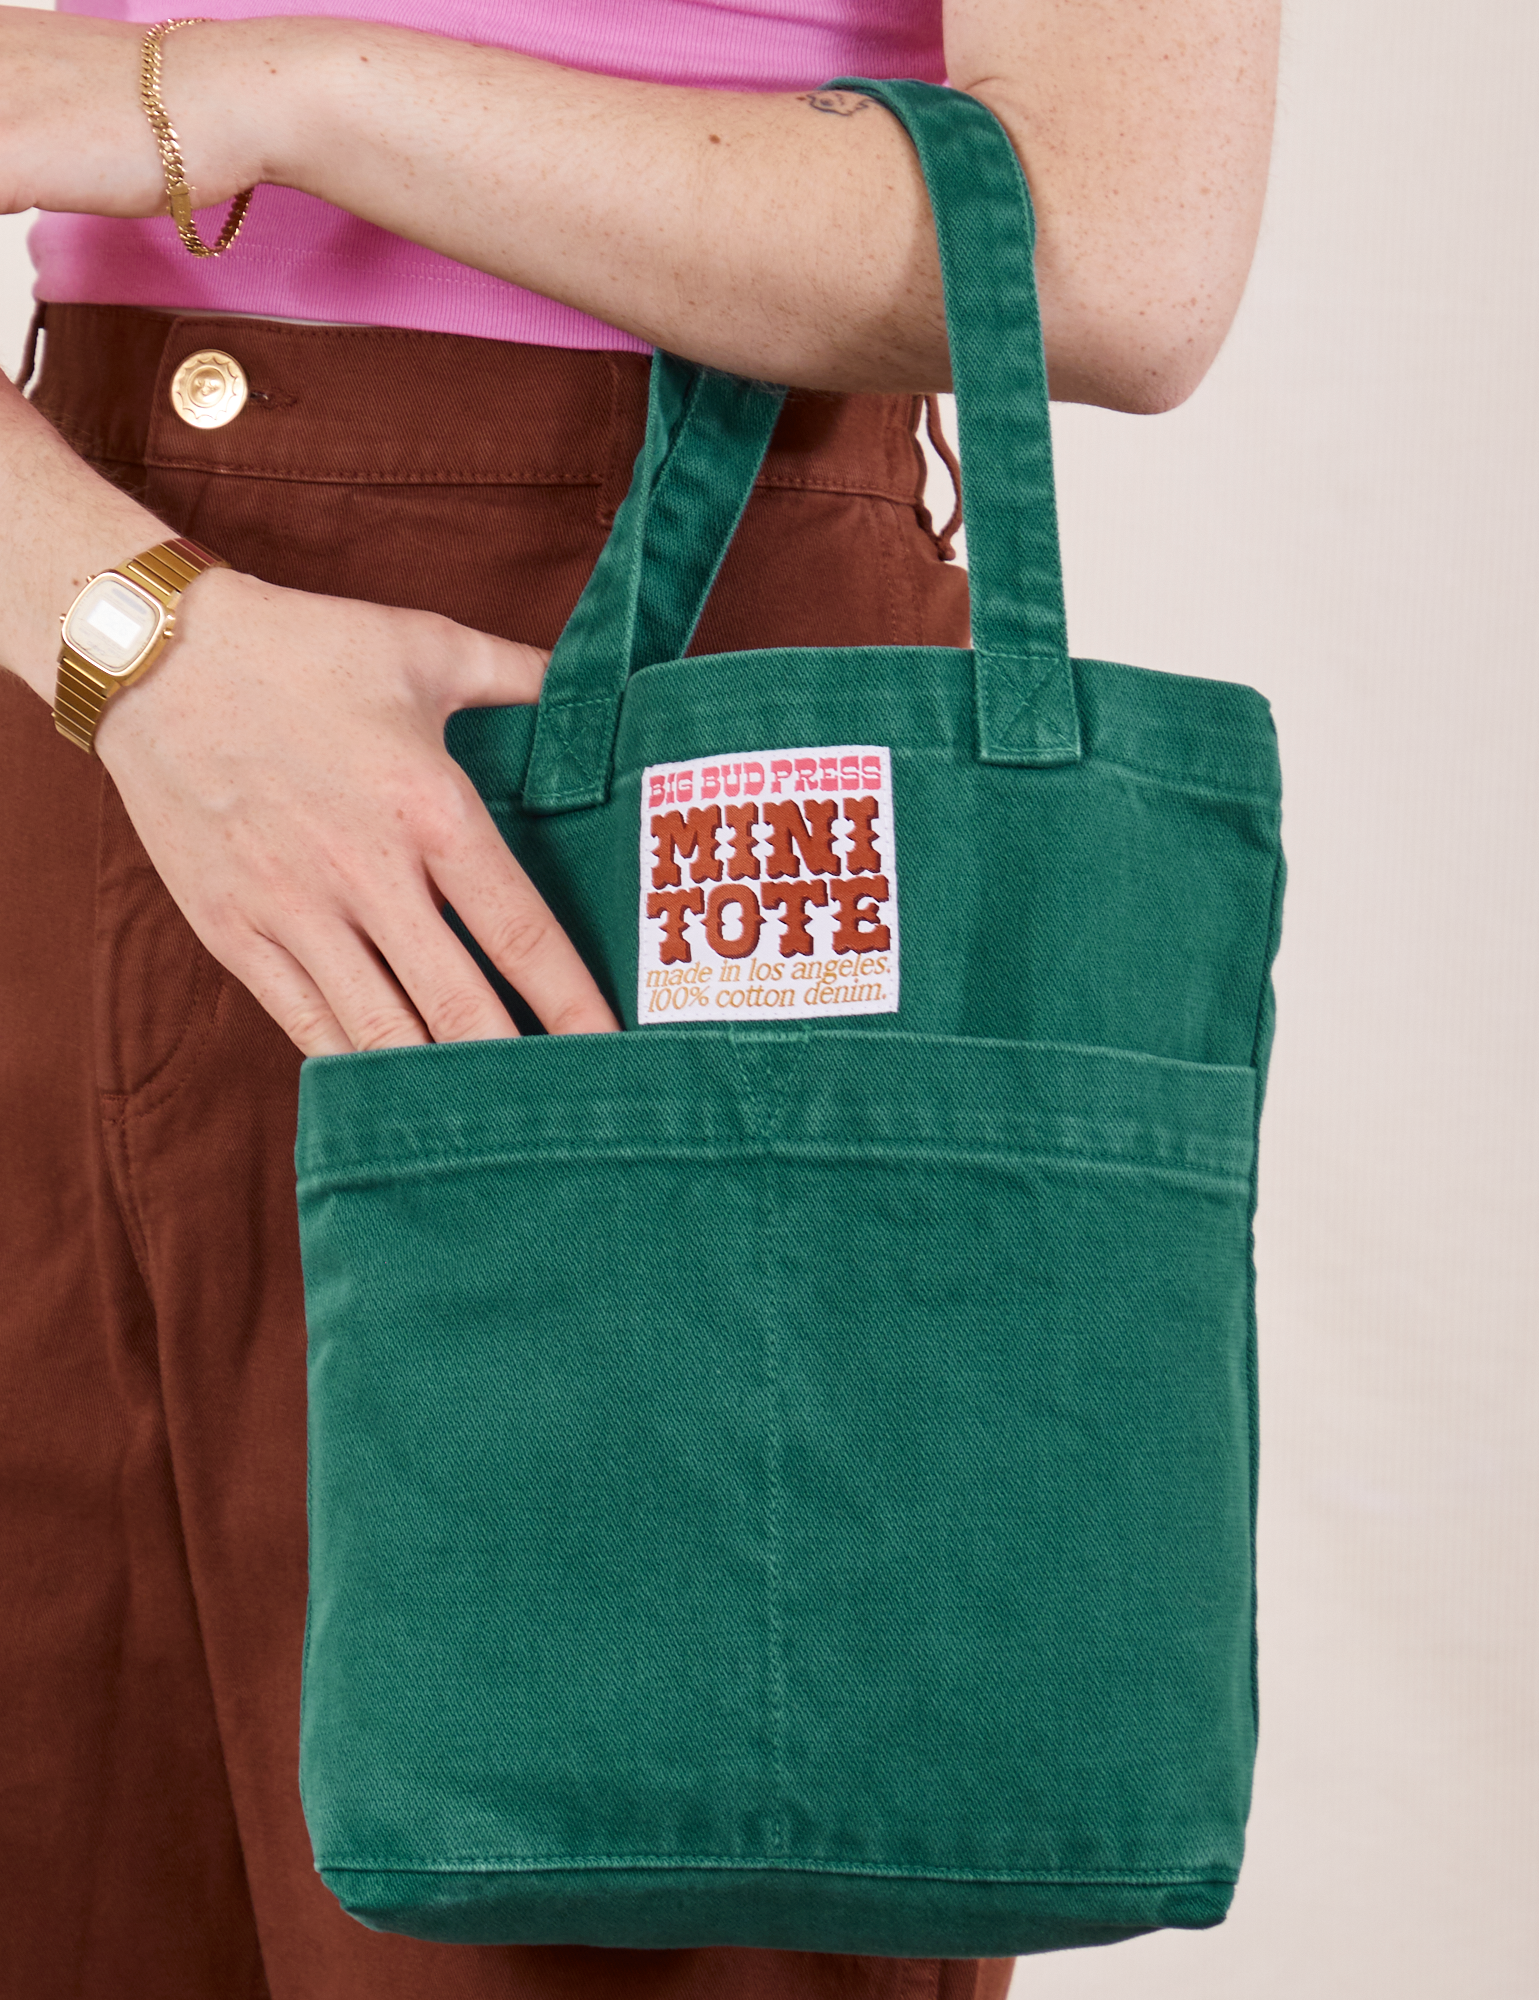 Mini Tote Bag in Hunter Green on Hana&#39;s arm